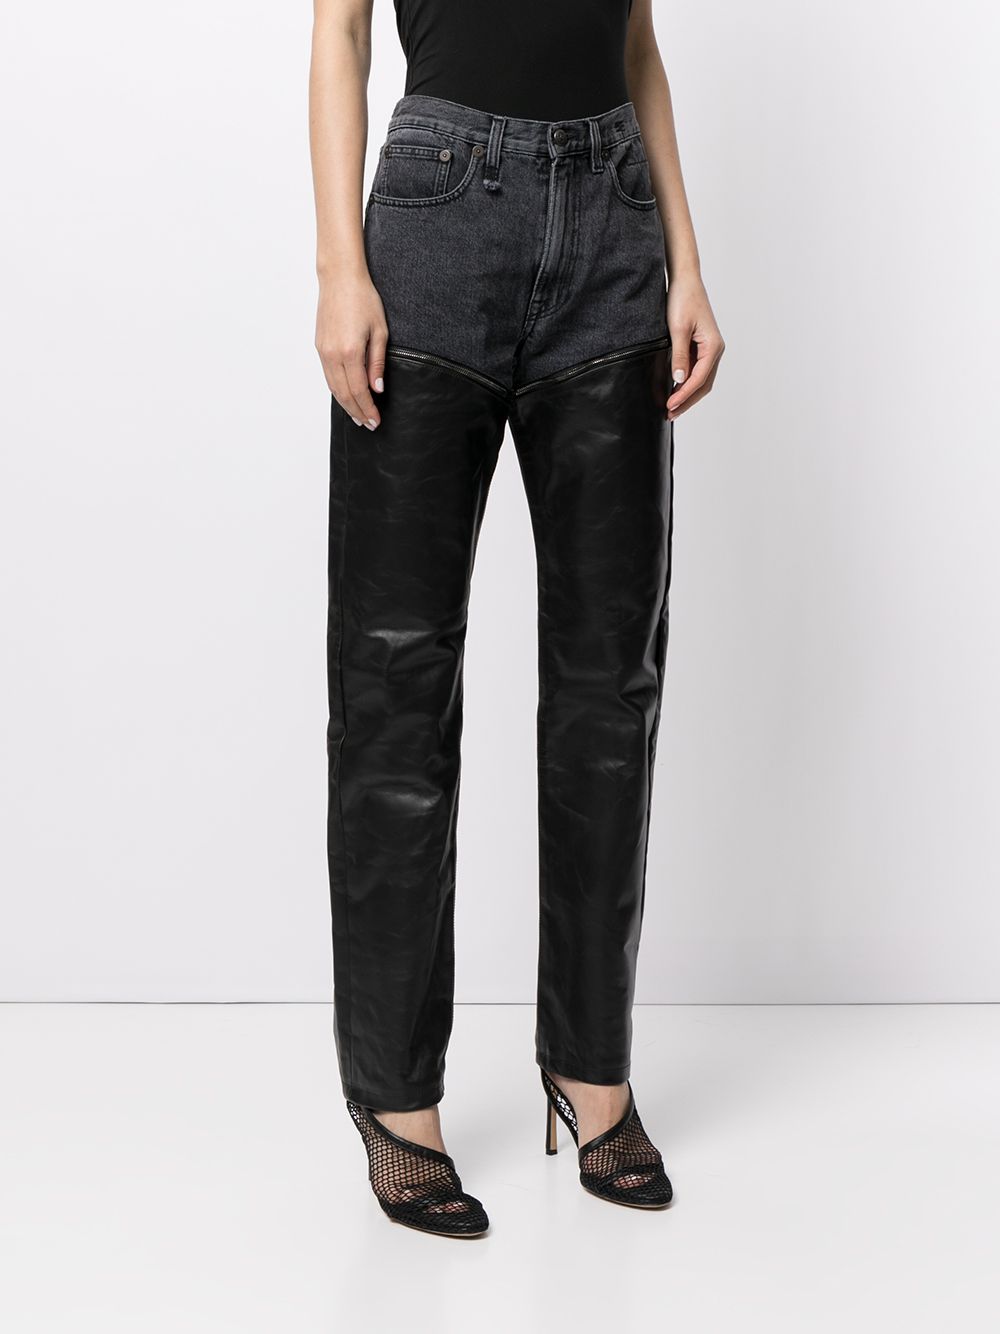 R13 zip-away Leather Panel Jeans - Farfetch